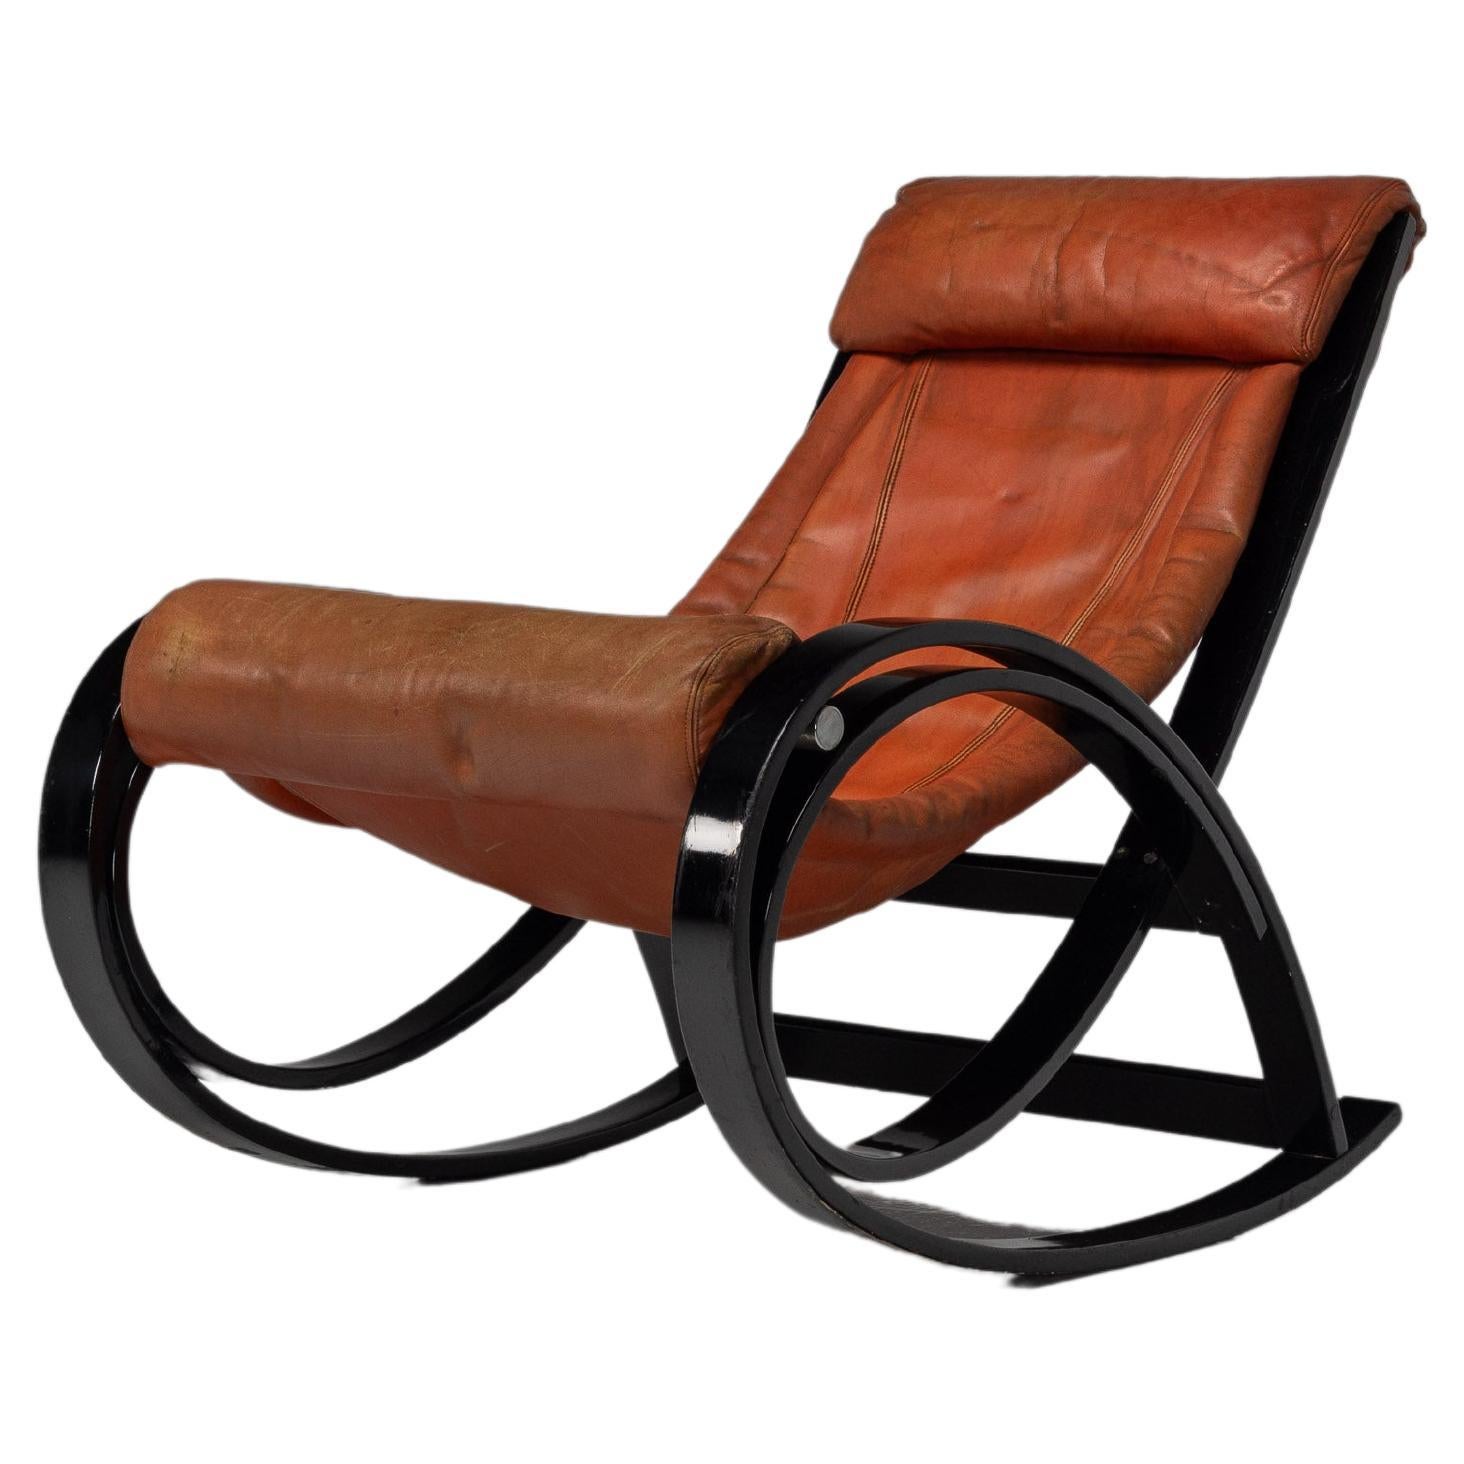 Chaise à bascule Sgarsul de Gae Aulenti Poltronova Italie 1962 en vente